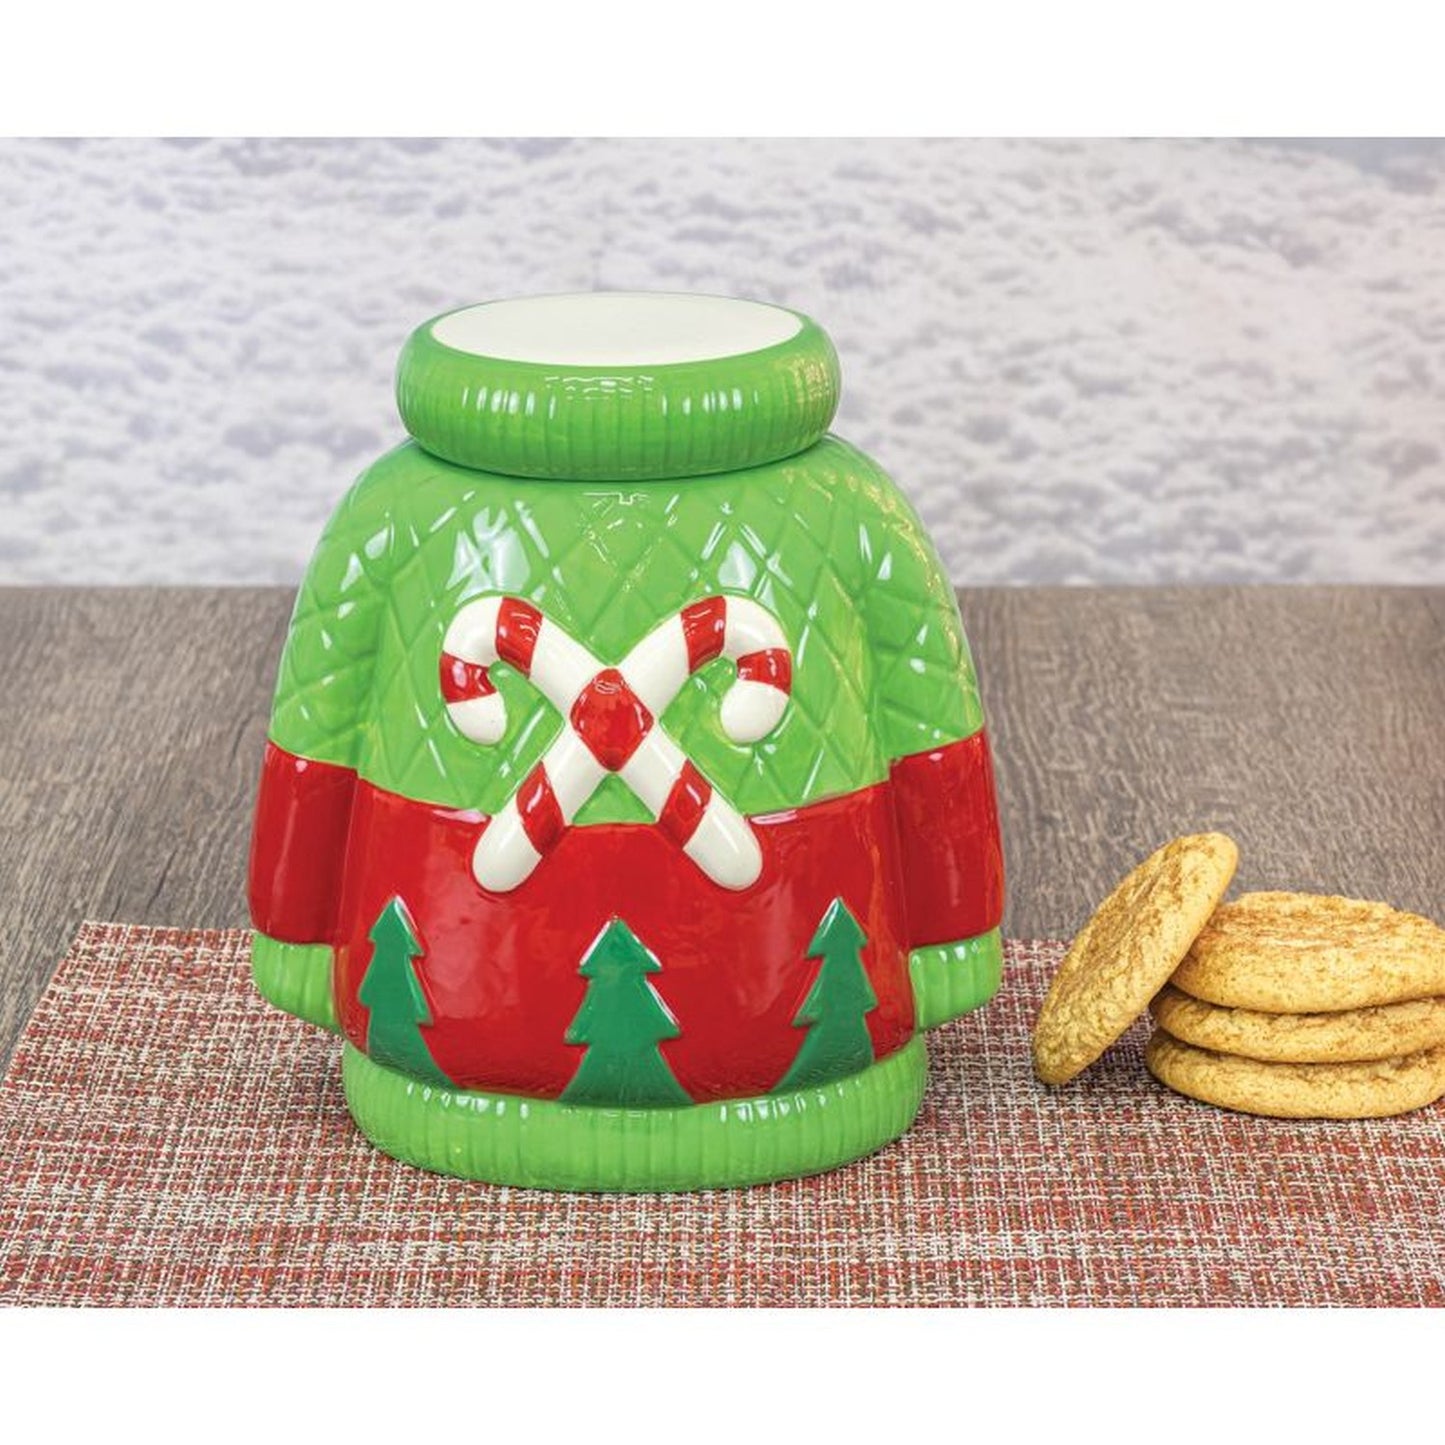 Hanna's Handiworks Candy Cane Sweater Cookie Jar